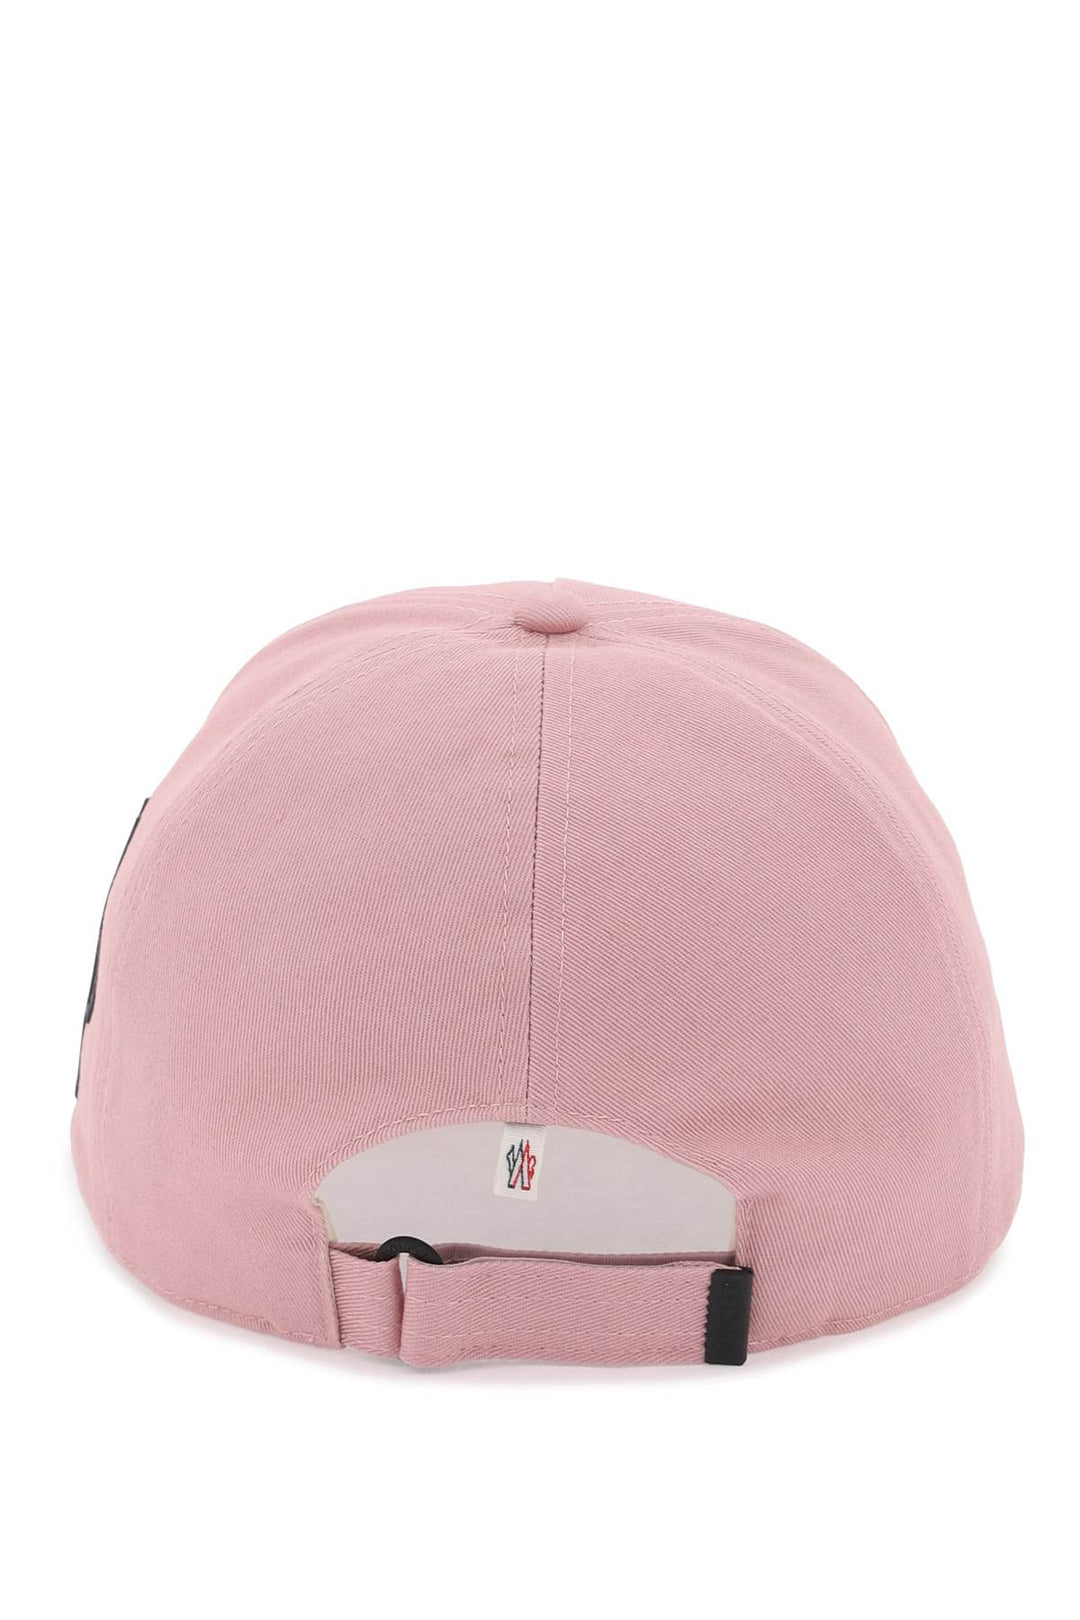 Moncler Grenoble Baseball Cap Made Of Gab   Pink